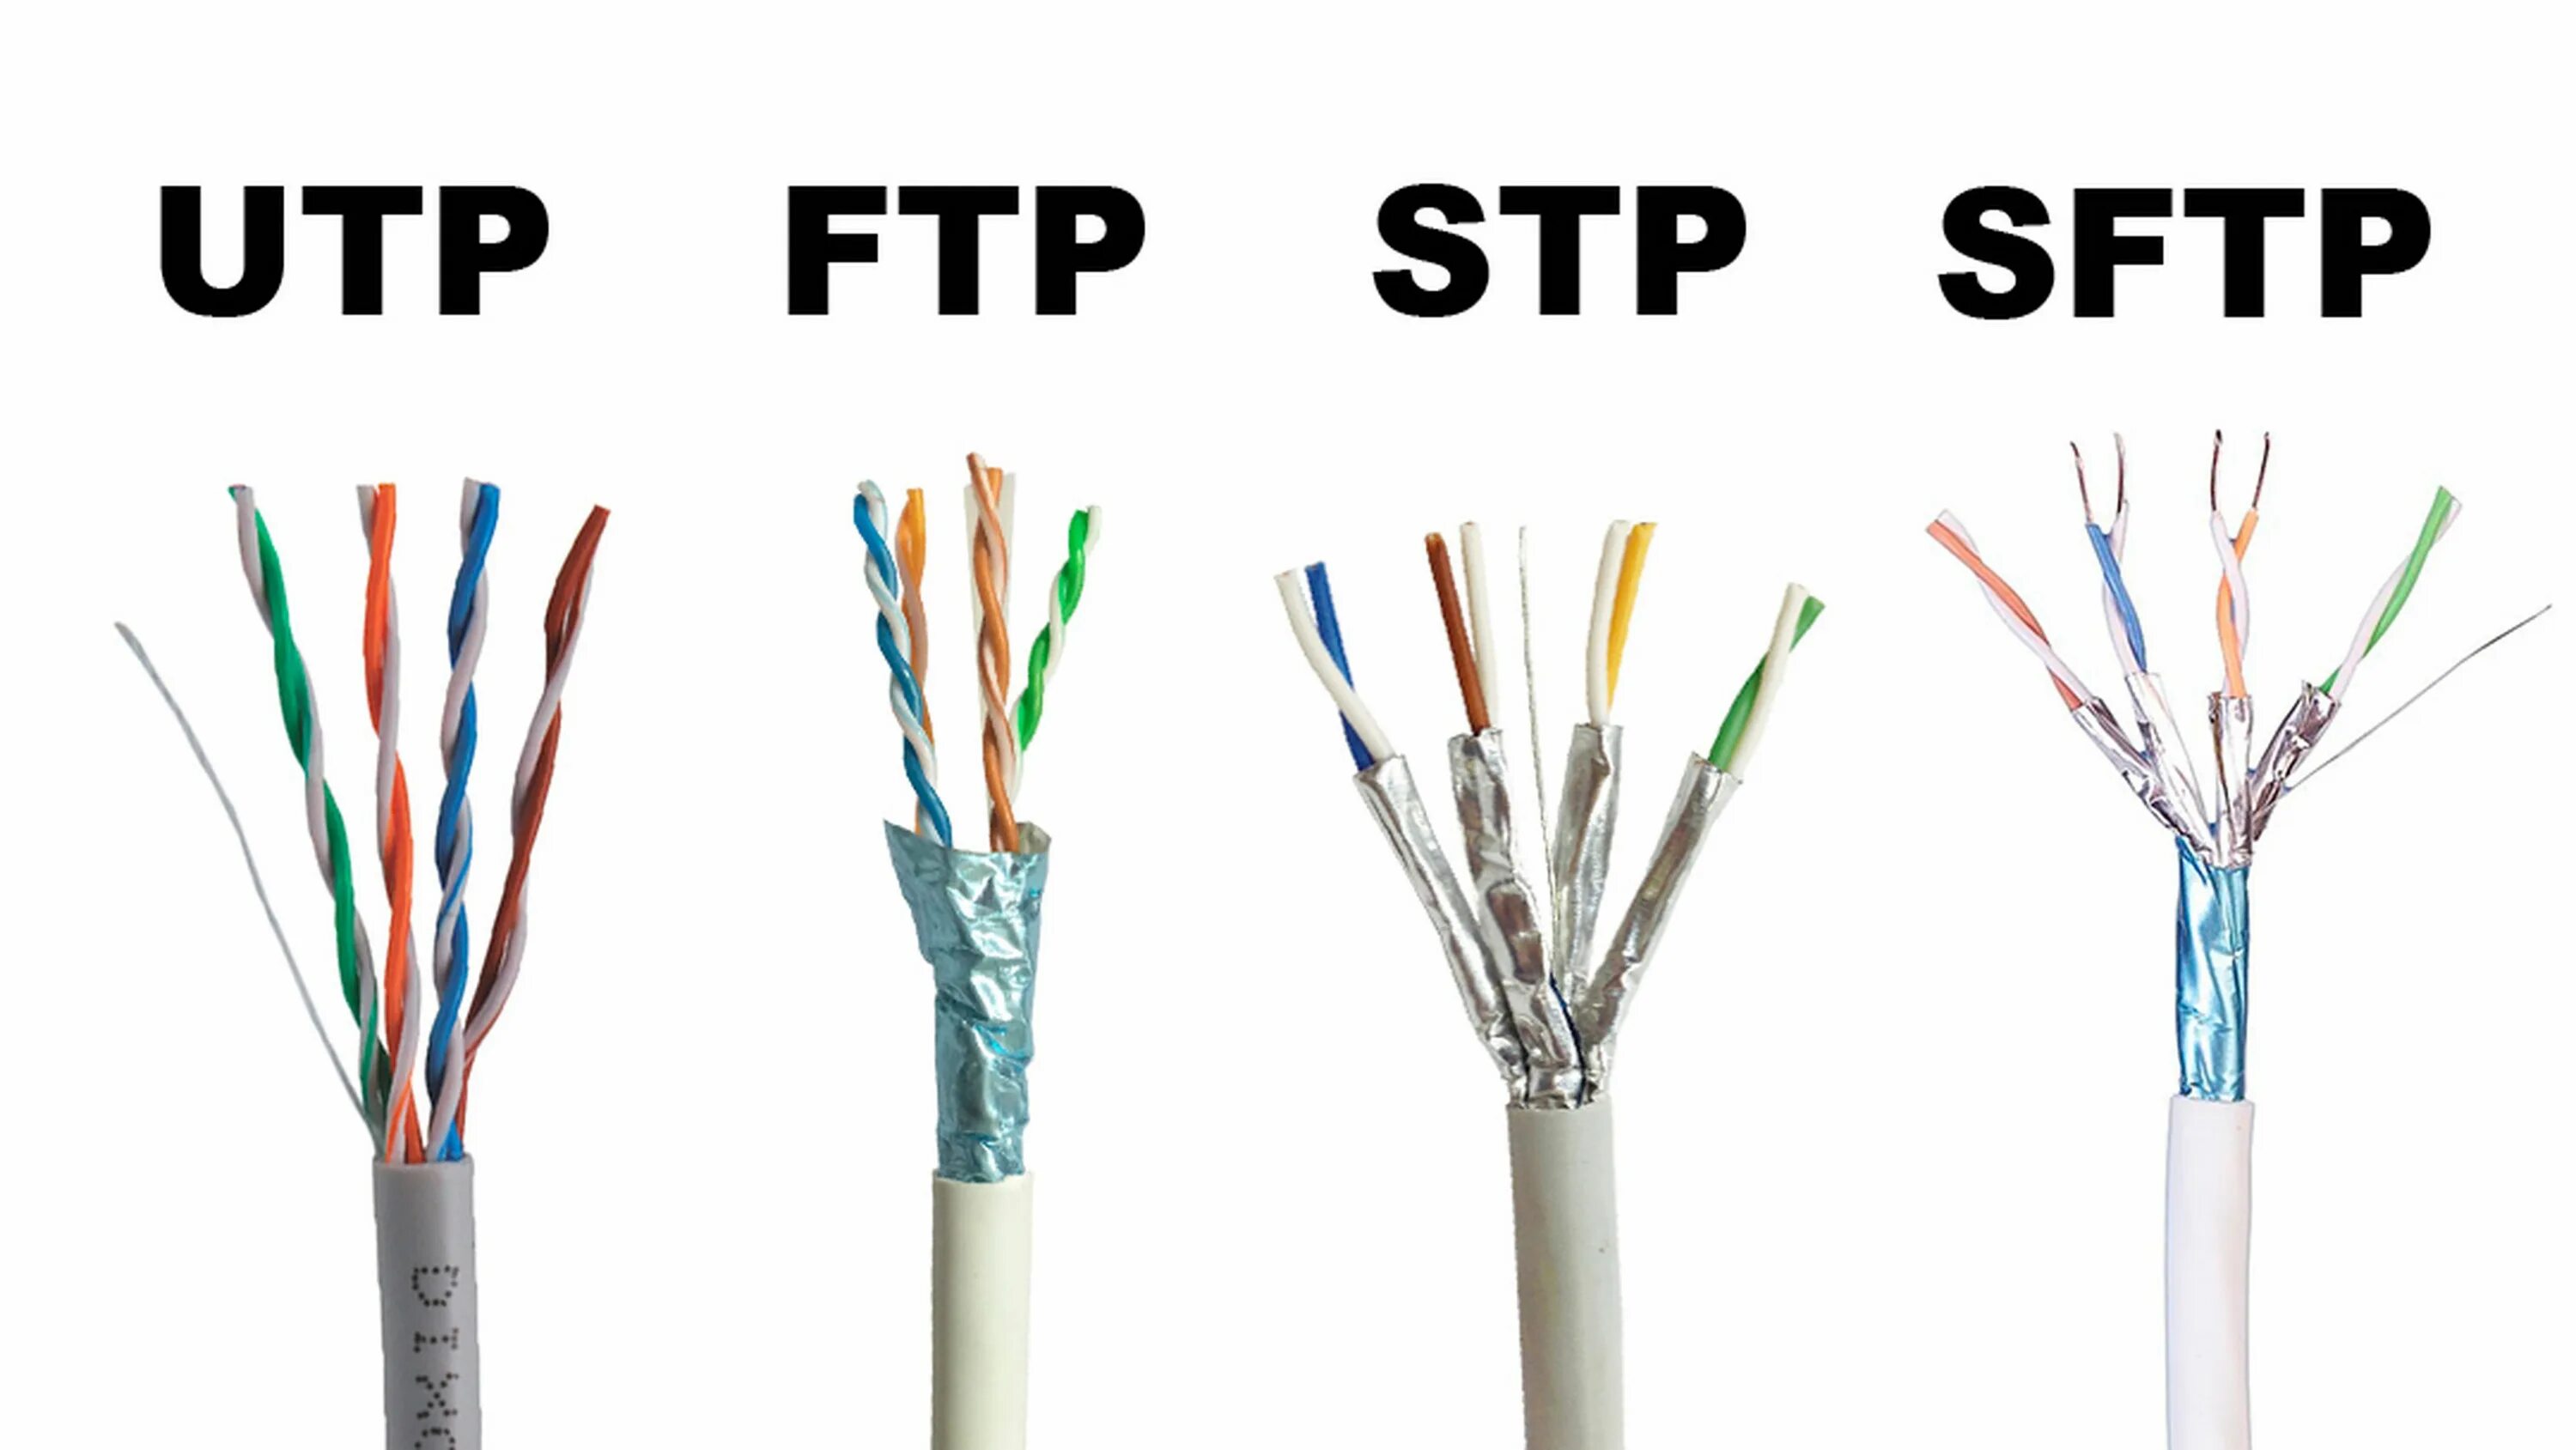 Кабель типа витая пара FTP cat6. UTP И FTP кабель отличие. UTP FTP STP кабель разница. Витая пара FTP И UTP разница.